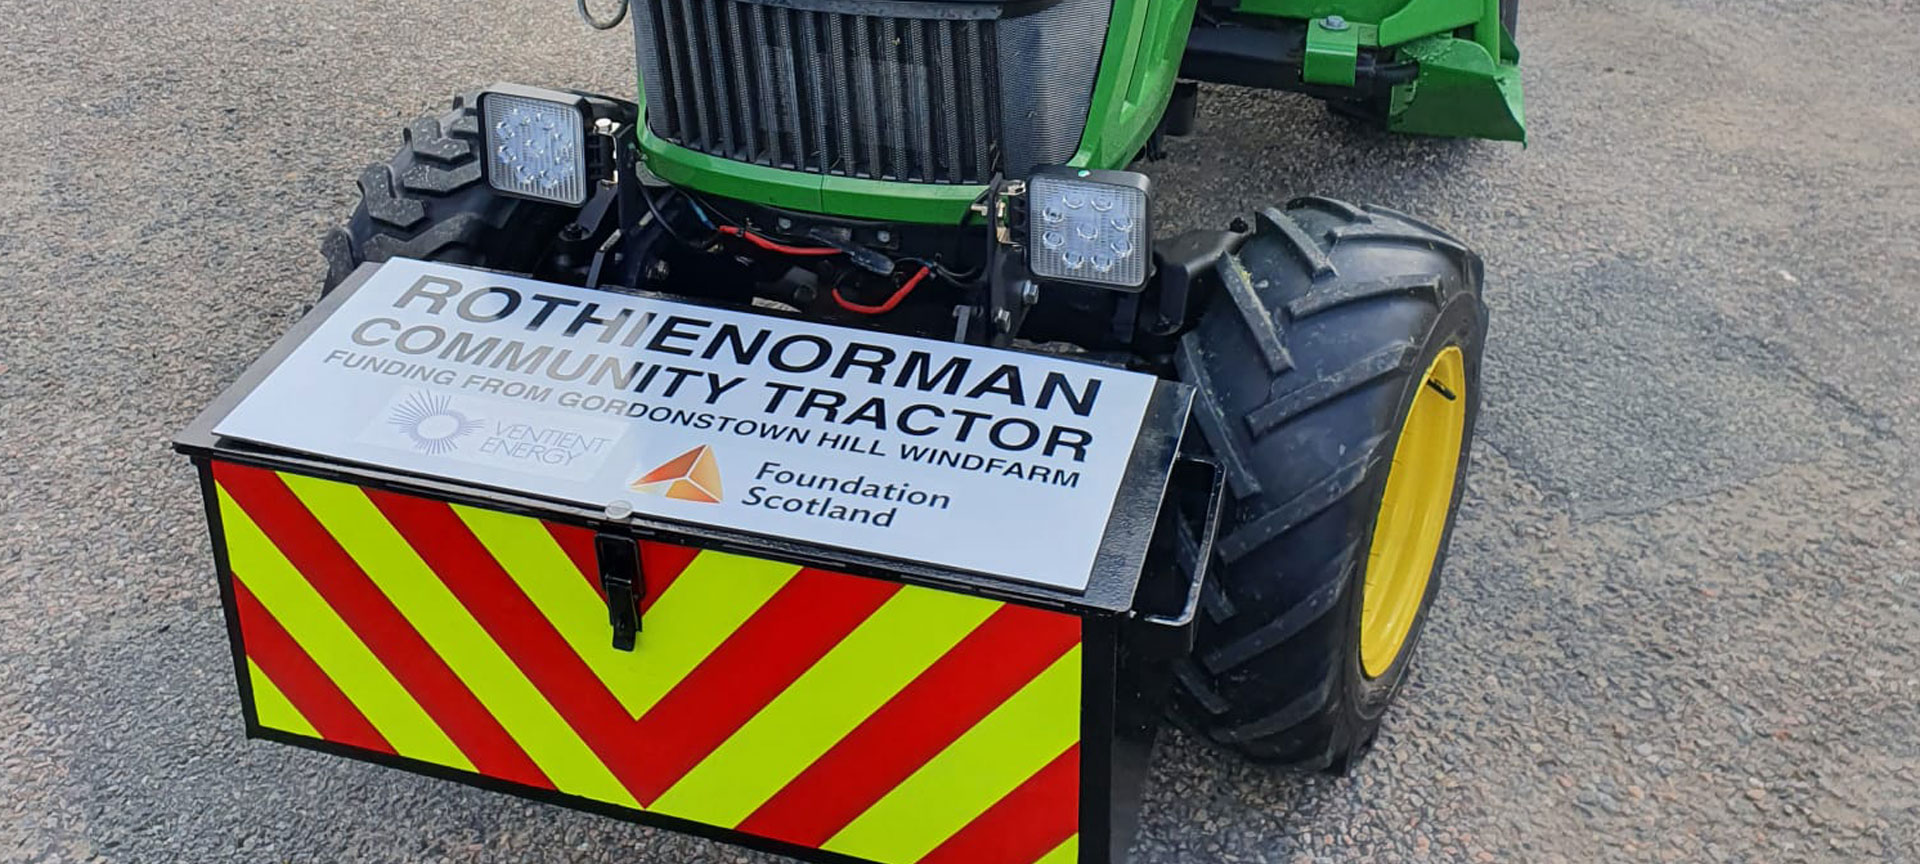 Rothienorman Community Tractor